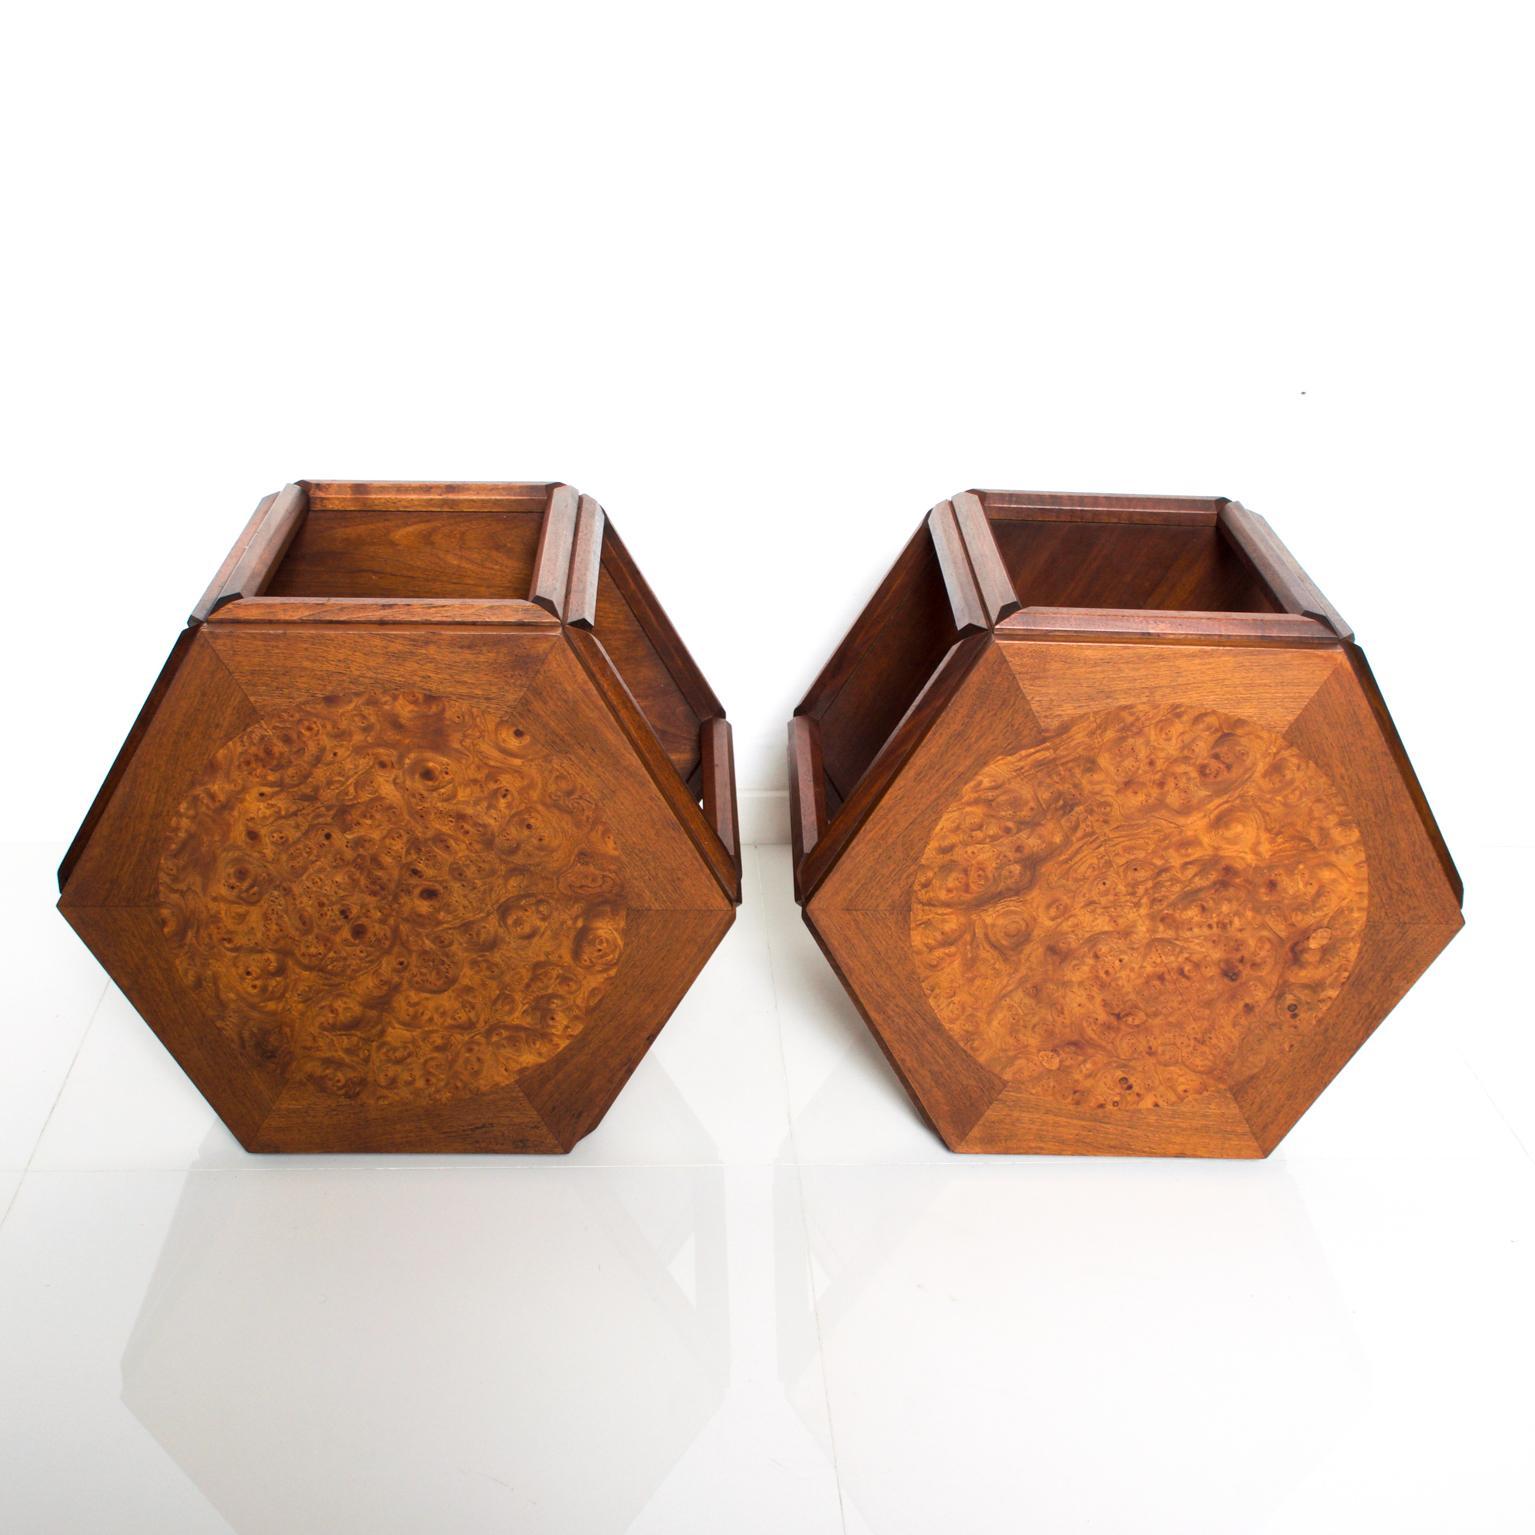 American Hexagonal Side Tables in Walnut with Burlwood Top by John Keal for Brown Saltman